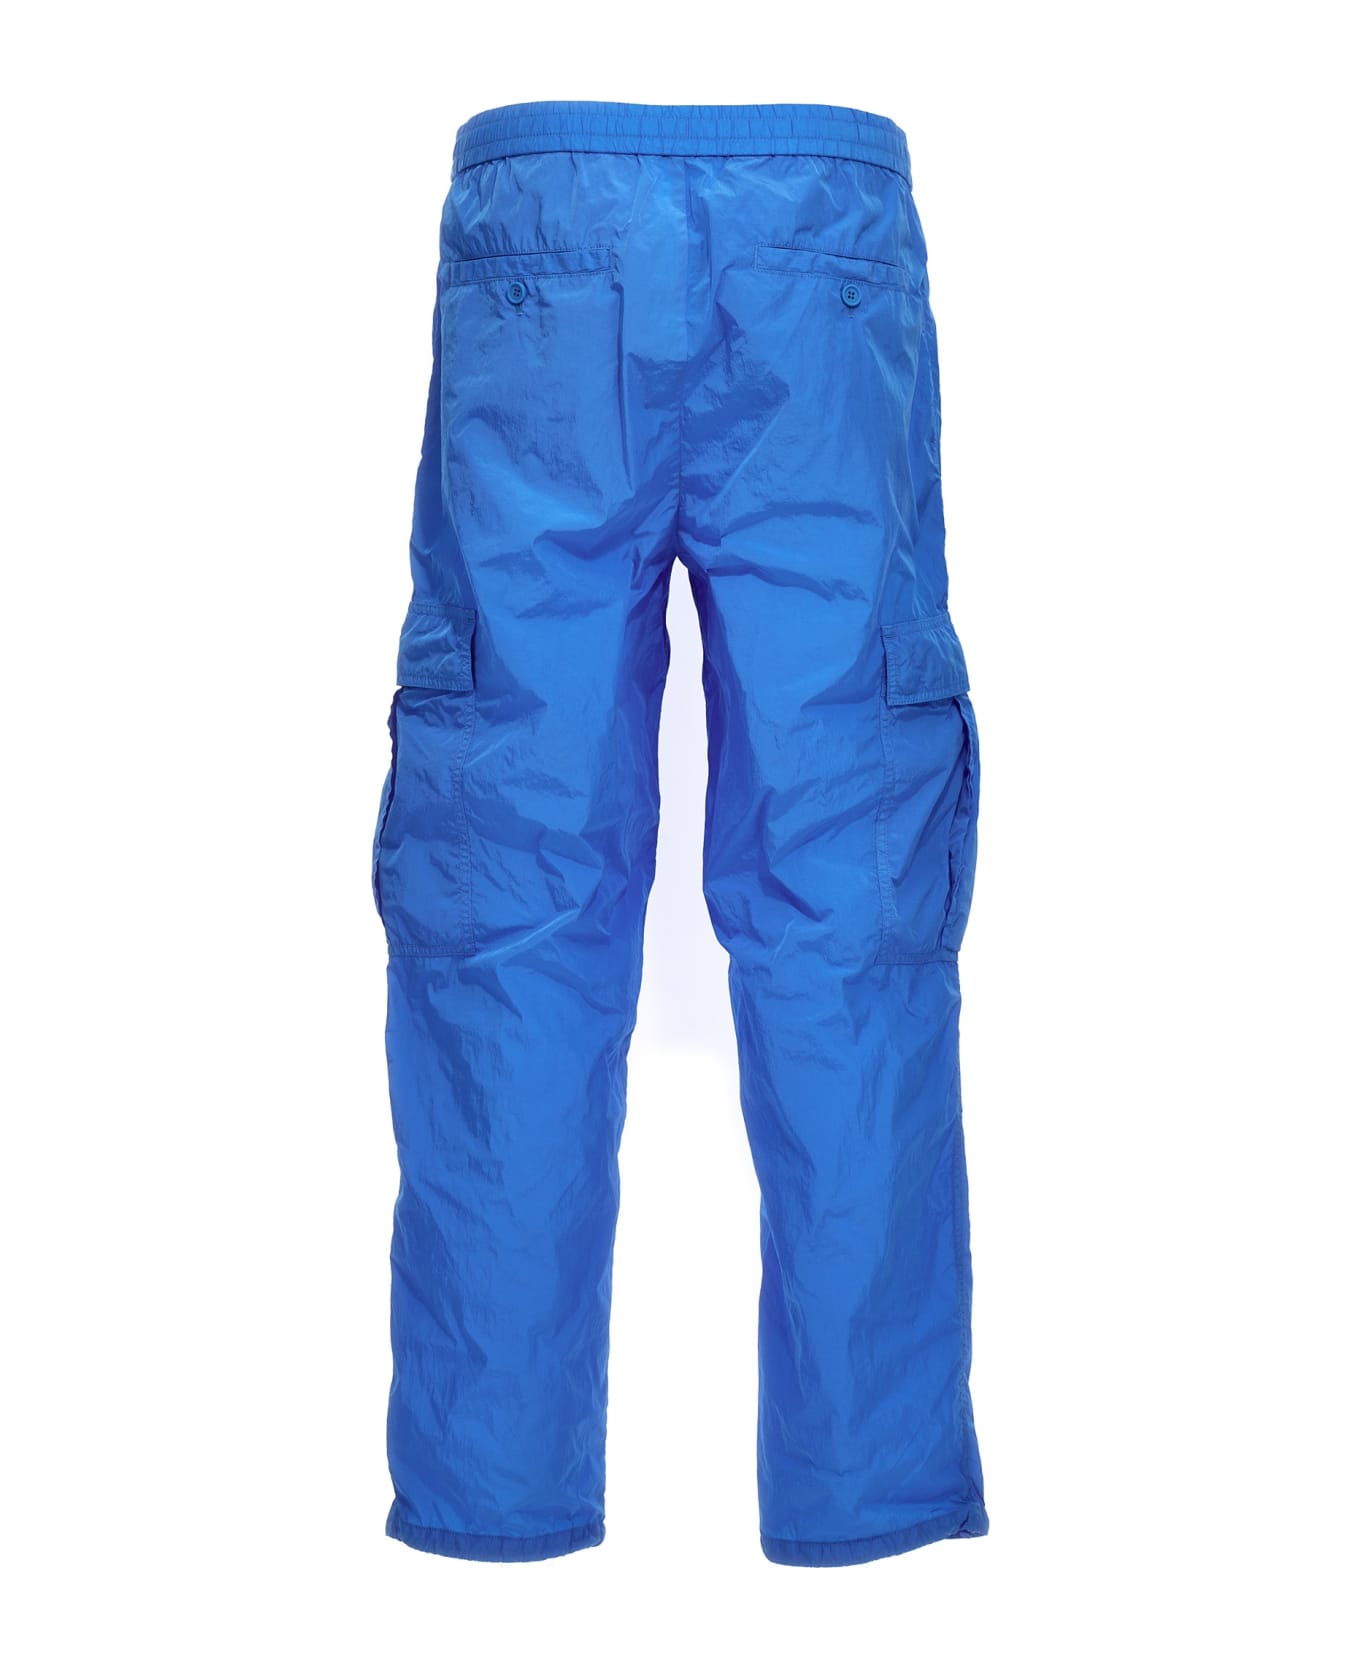 Burberry Capleton' Pants - Light Blue